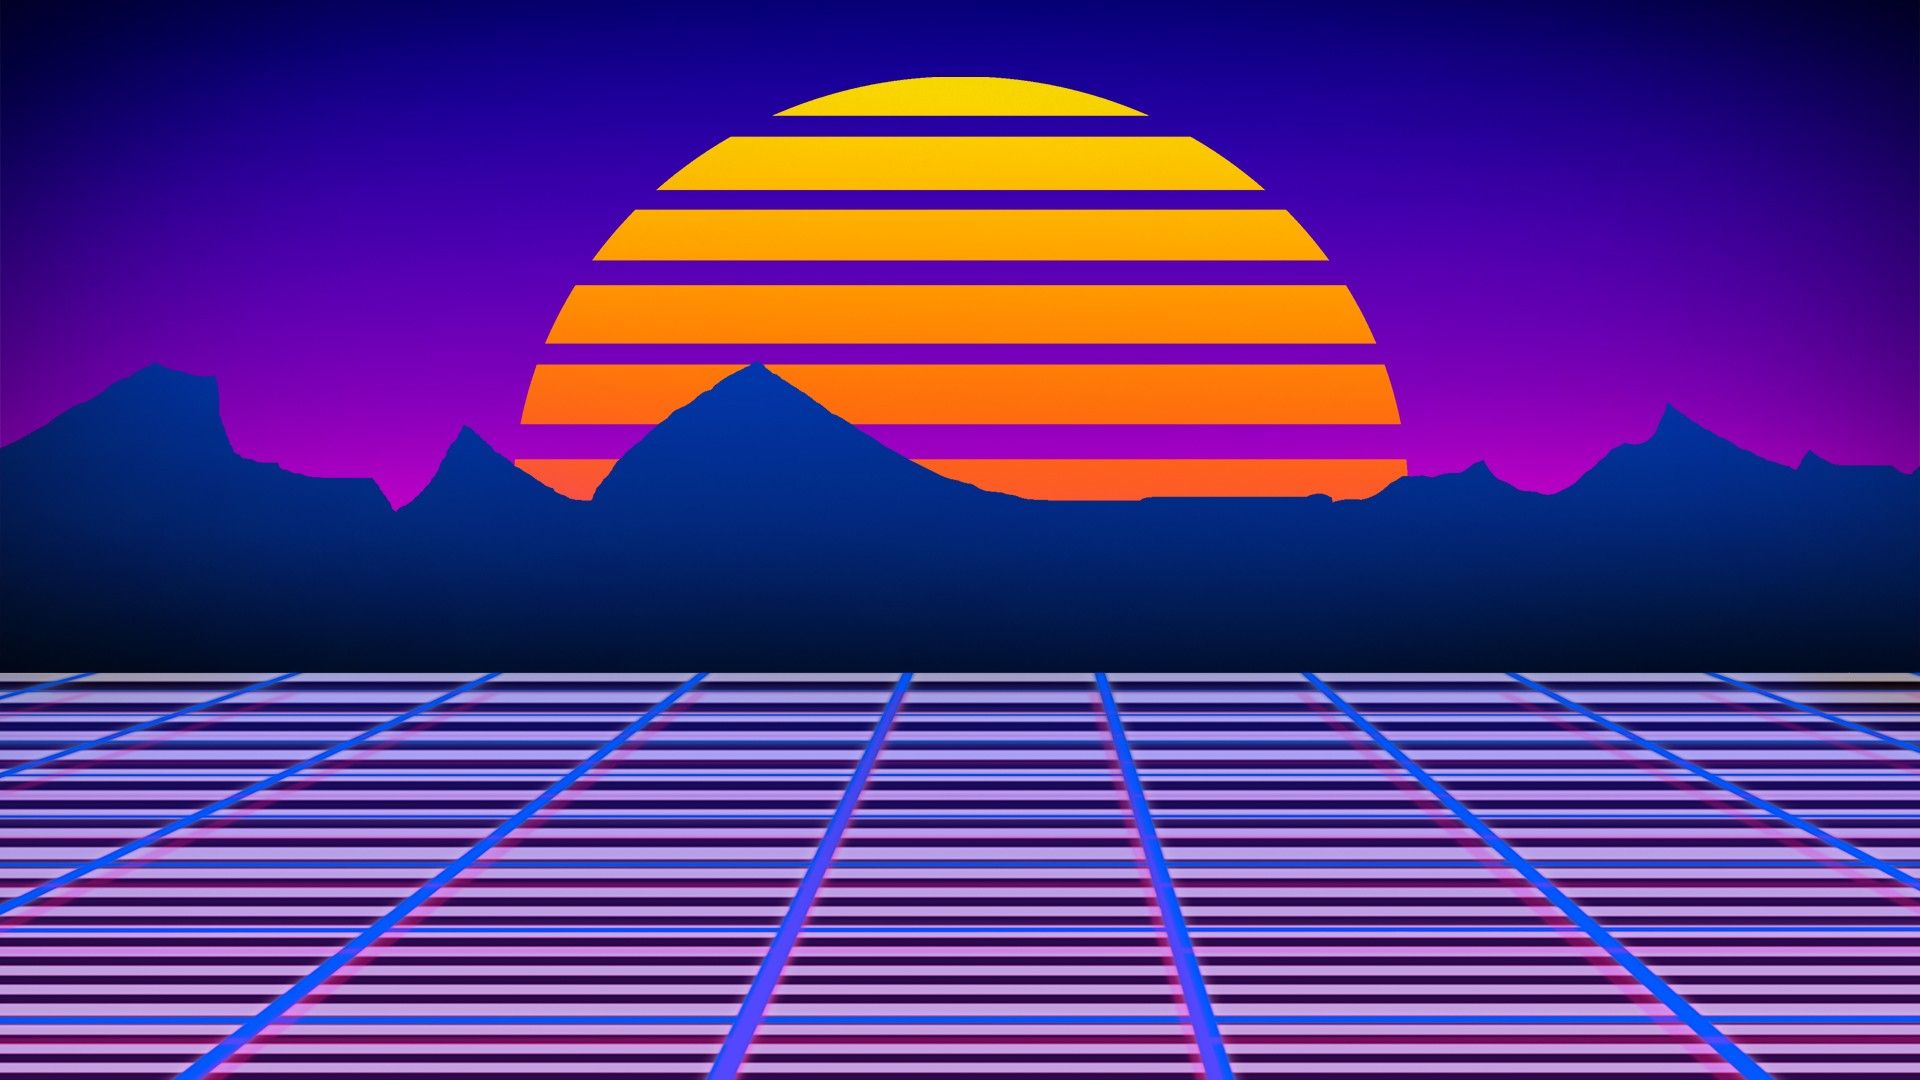 1920x1080 neon lazer mohawk 1980s retro games robot grid digital art sunset sun colorful wallpaper JPG 306 kB